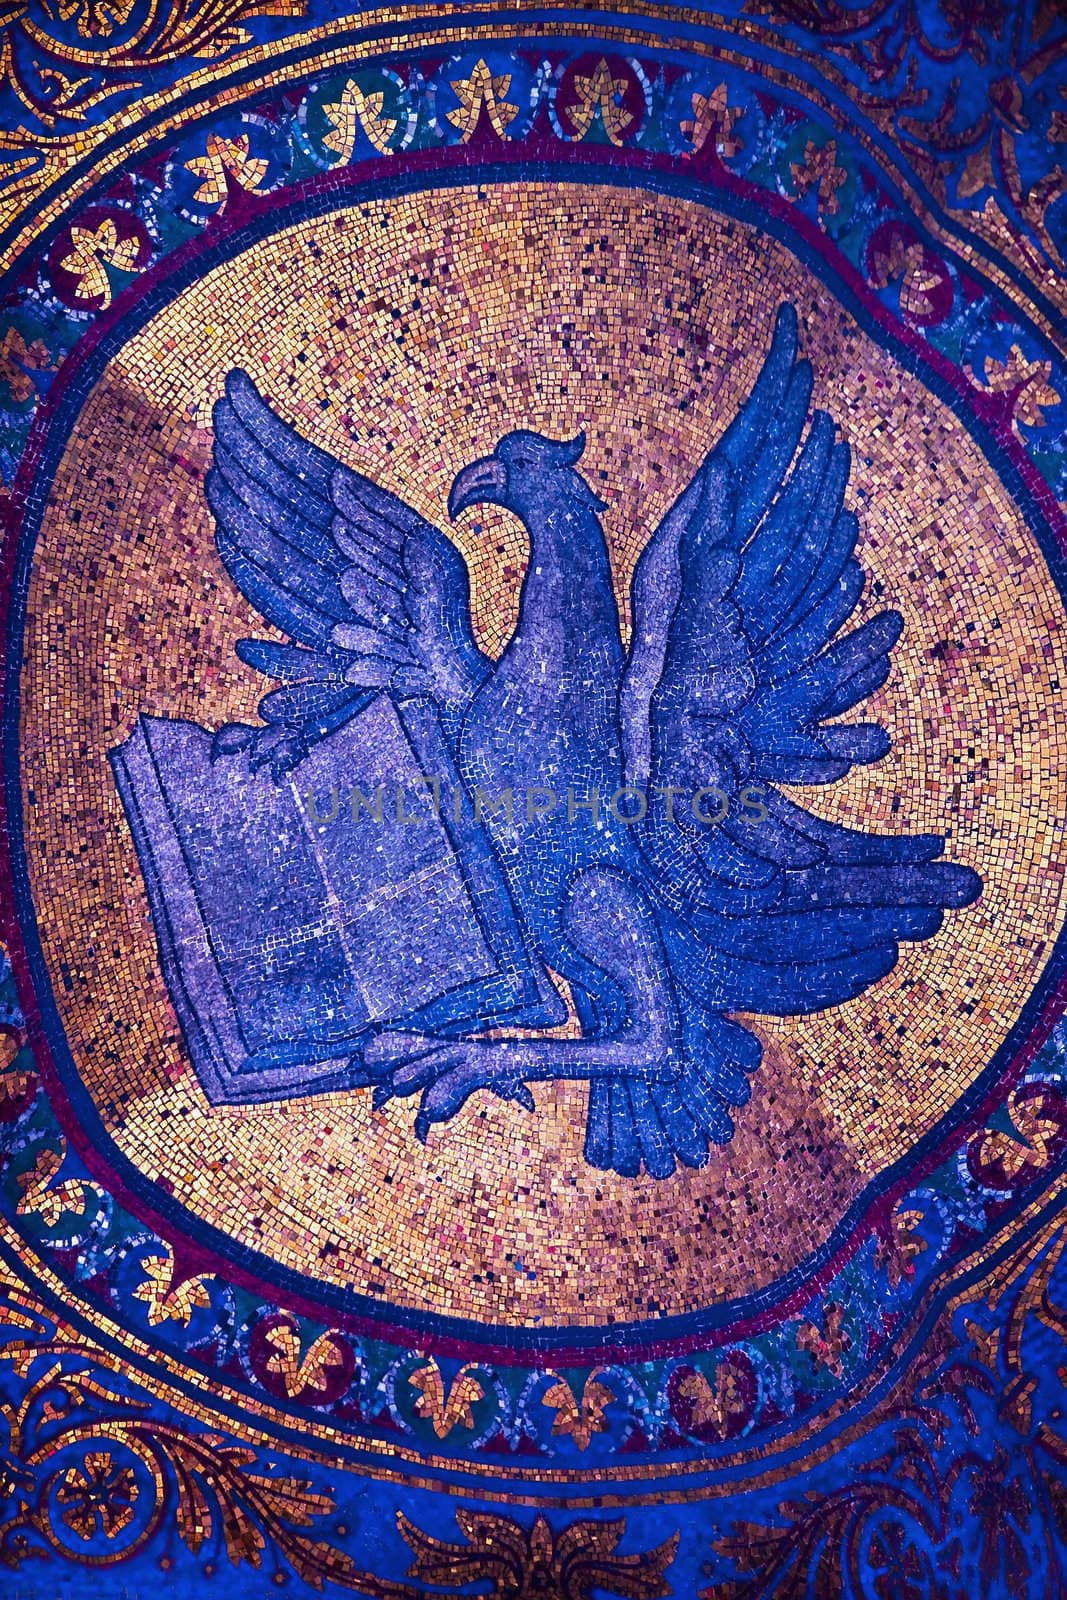 Eagle Mosaic Saint Mark's Basilica Venice Italy by bill_perry